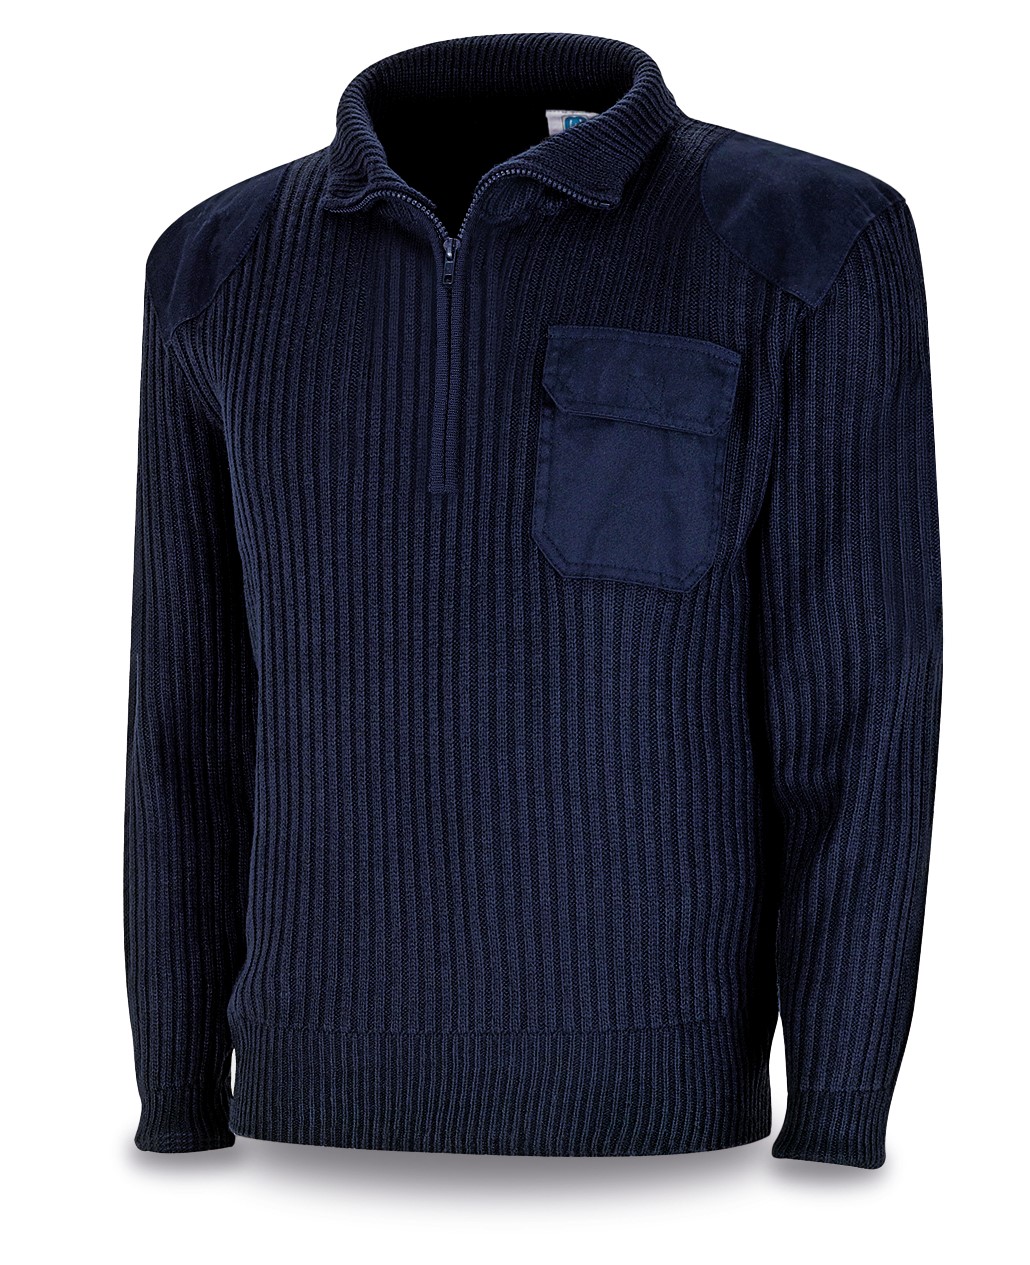 1288-JCA Workwear Jerseys Jersey with neck zipper 450 gr. Navy blue. 100% acryllic